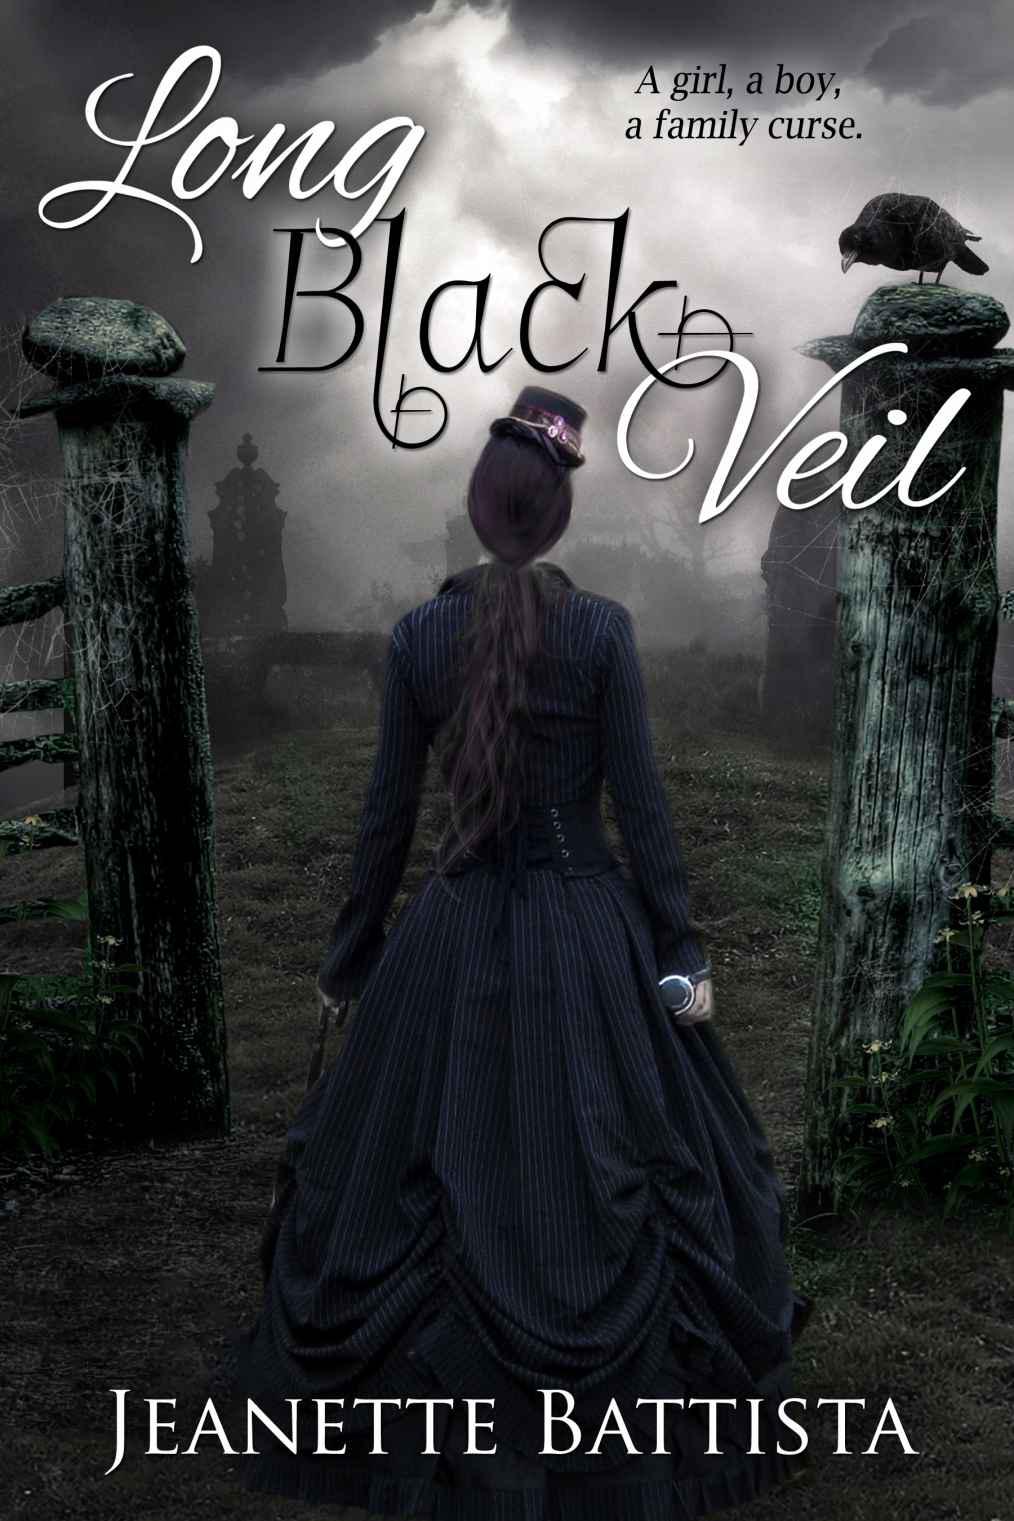 Long Black Veil by Jeanette Battista